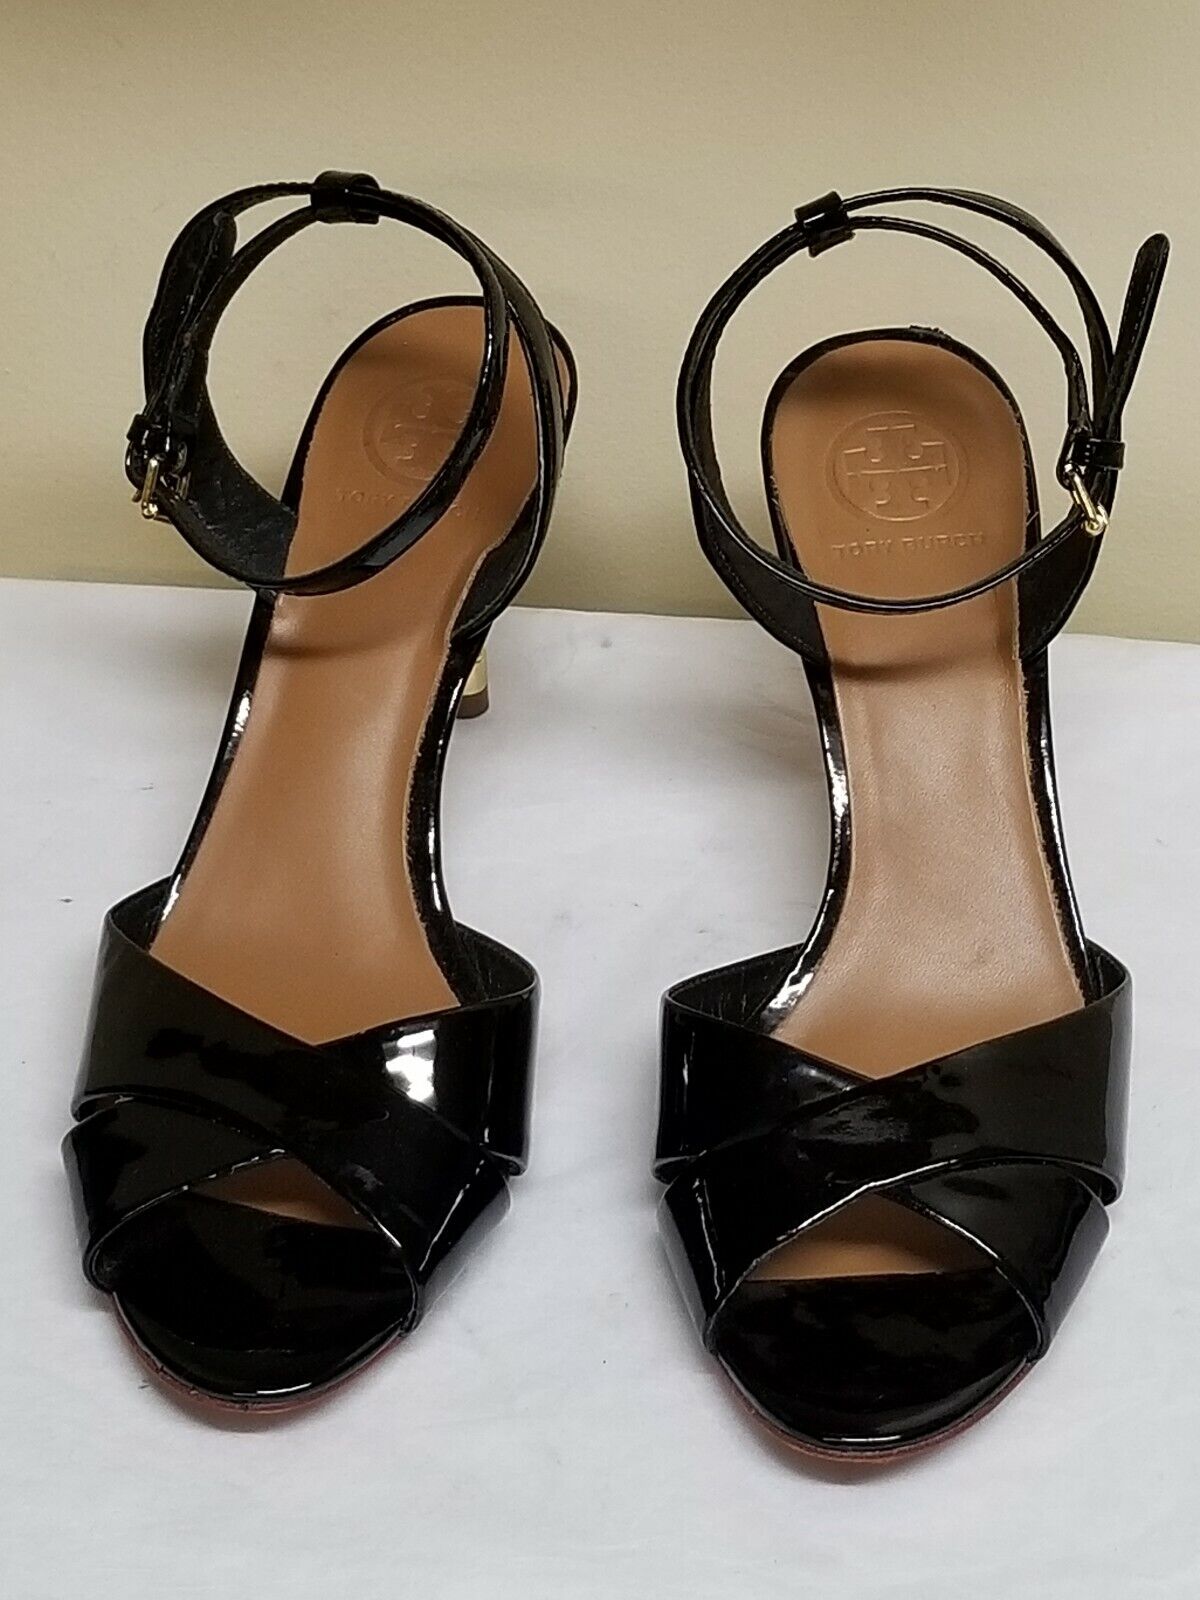 Tory Burch black formal high heels, size  M | eBay